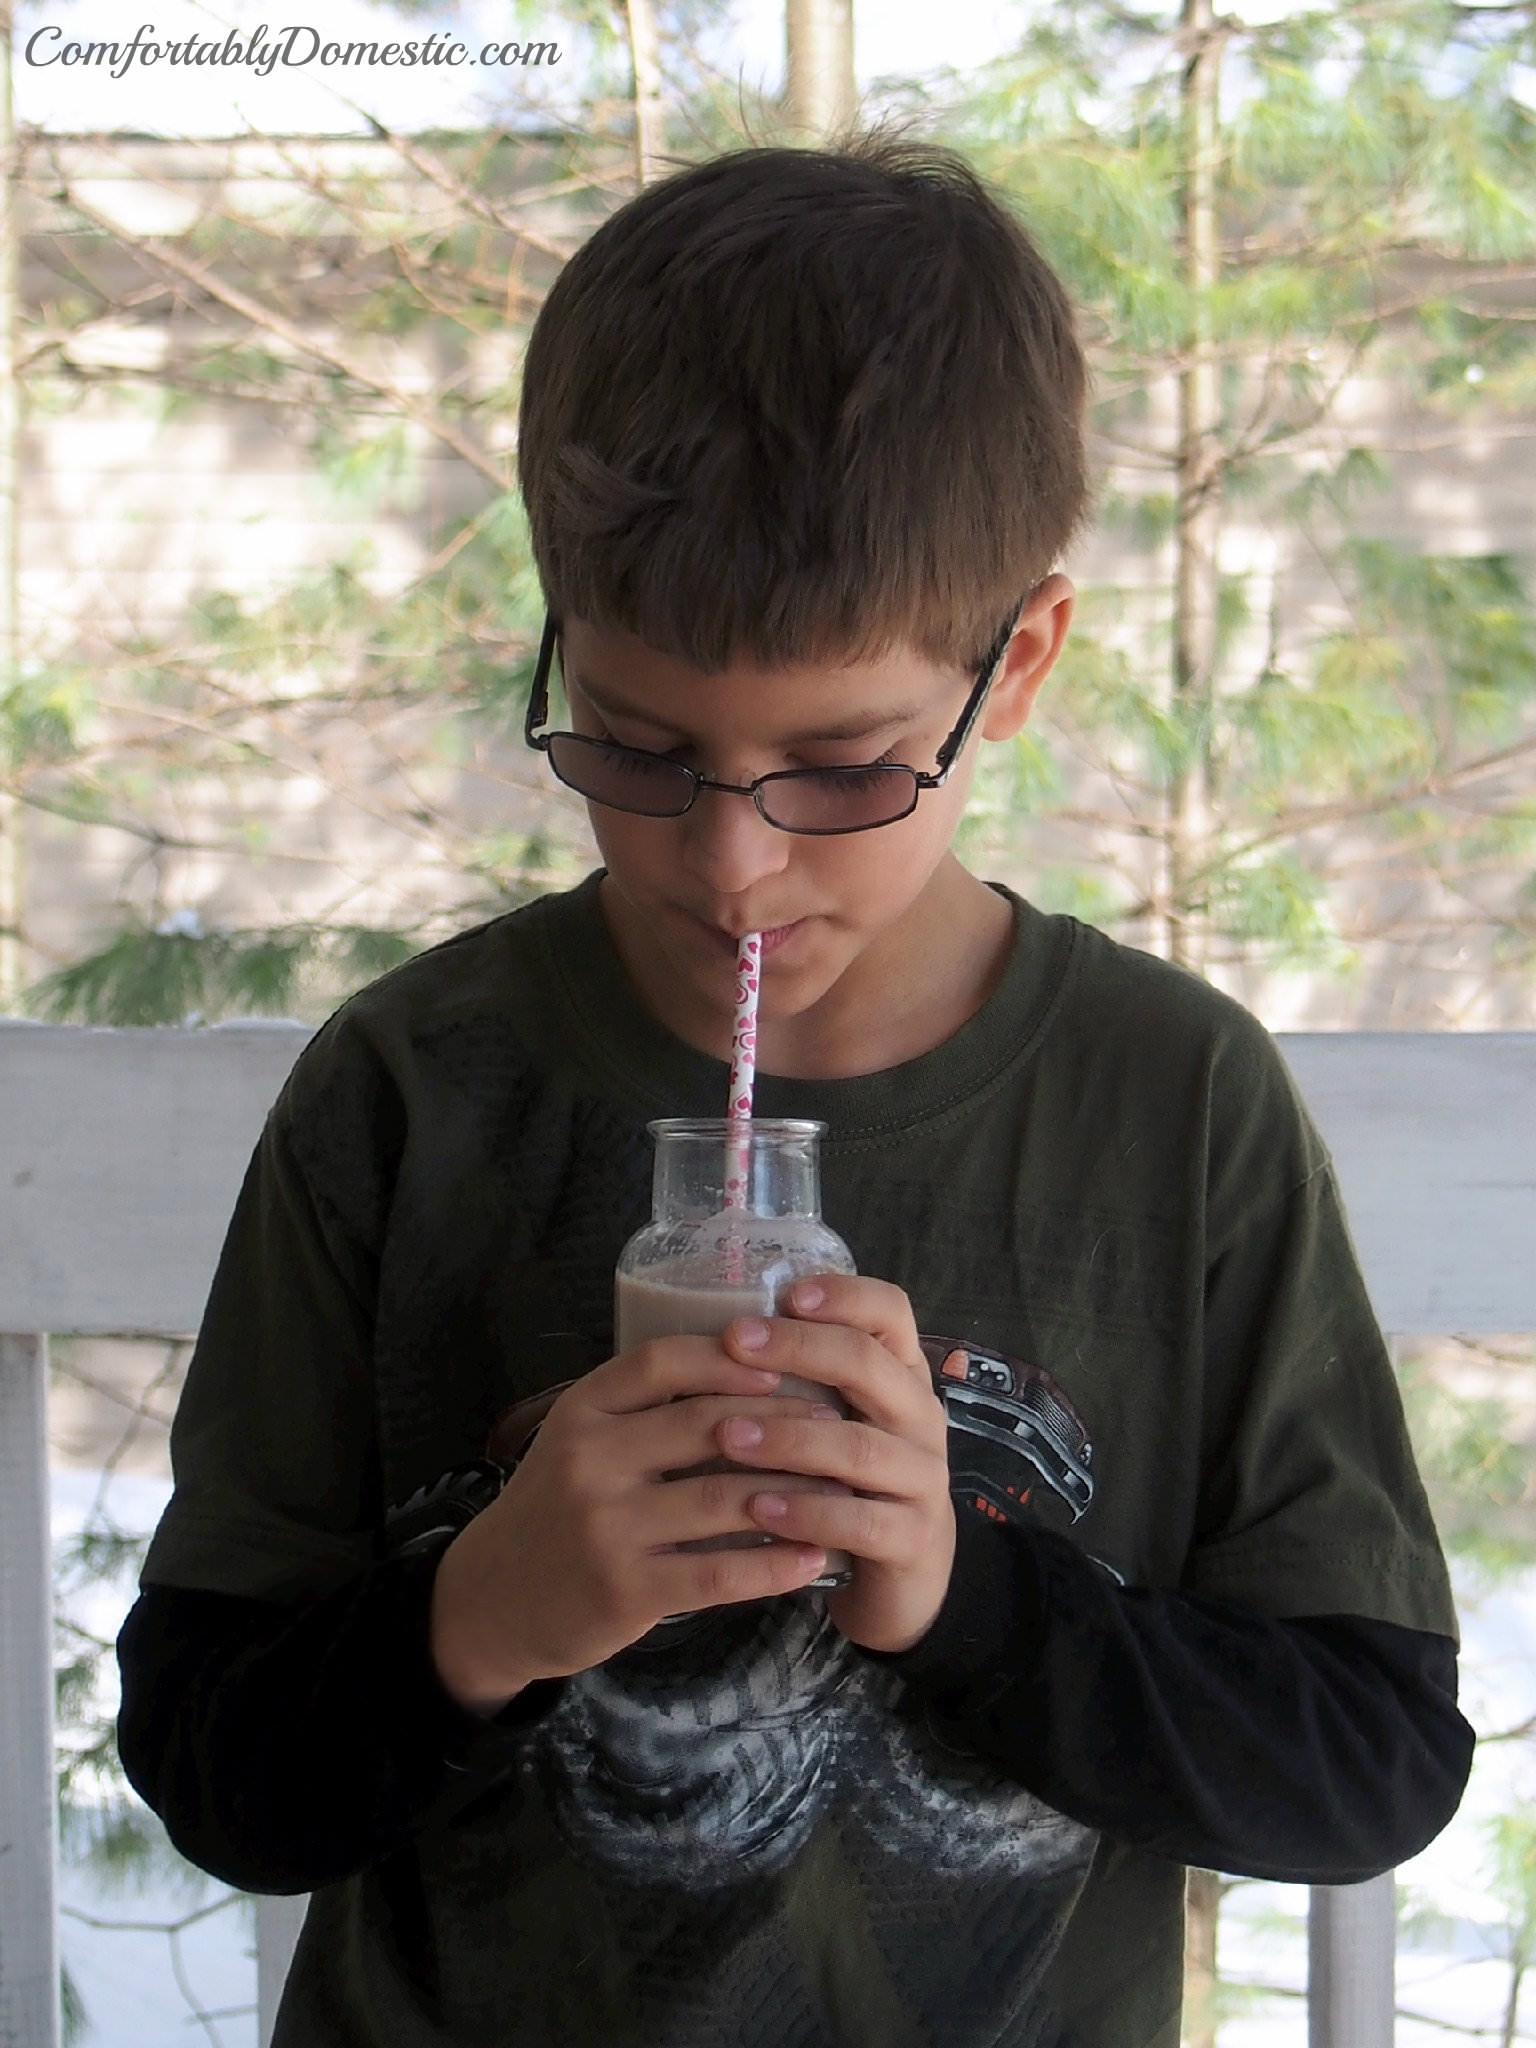 boy drinking chocolate milk made with homemade chocolate syrup.